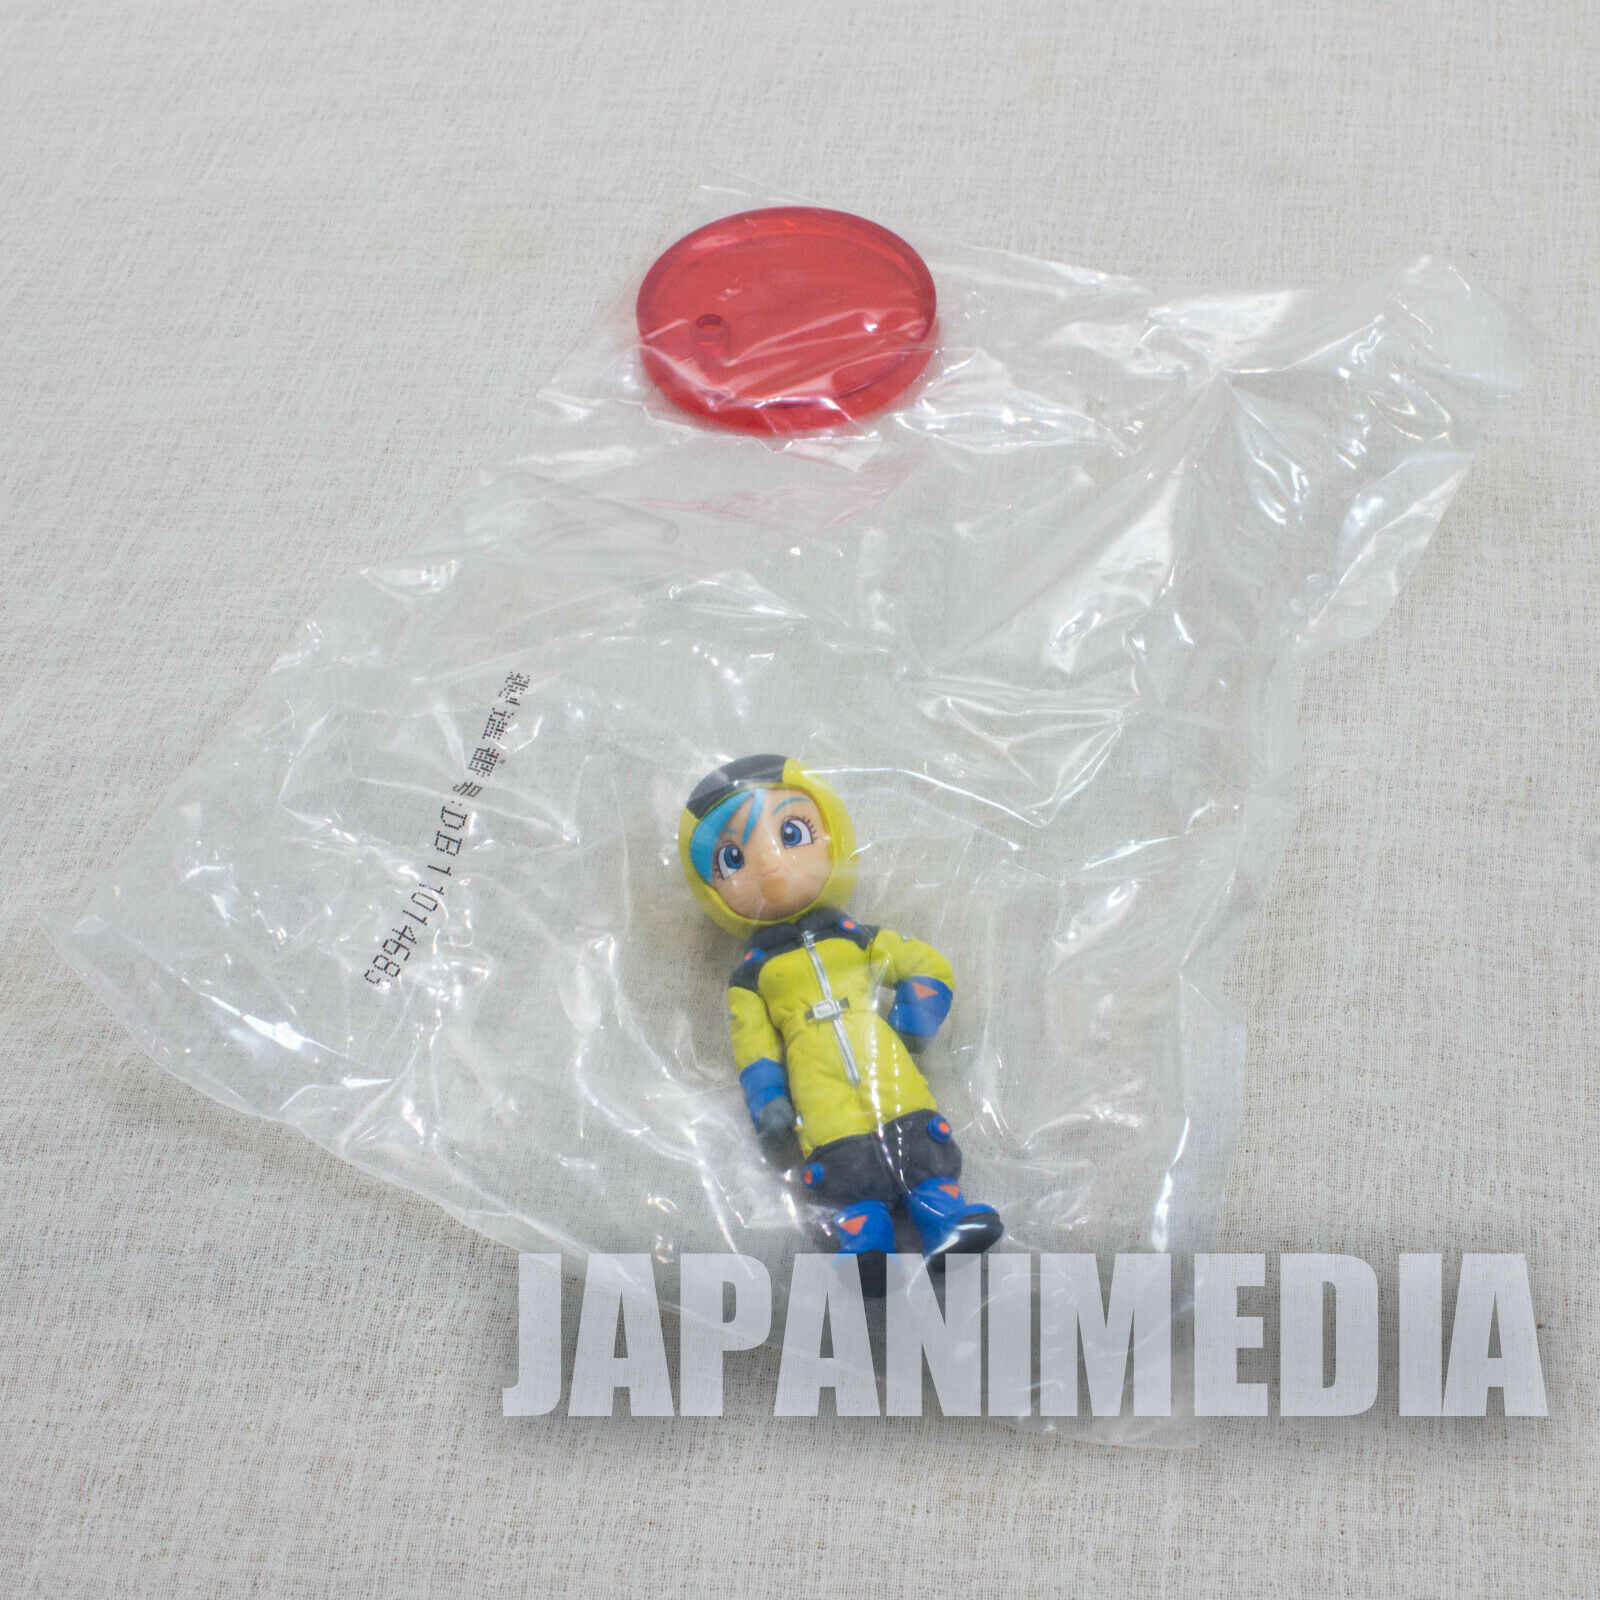 Dragon Ball Z WCF World Collectible Figure Bulma Space Suits JAPAN ANIME MANGA